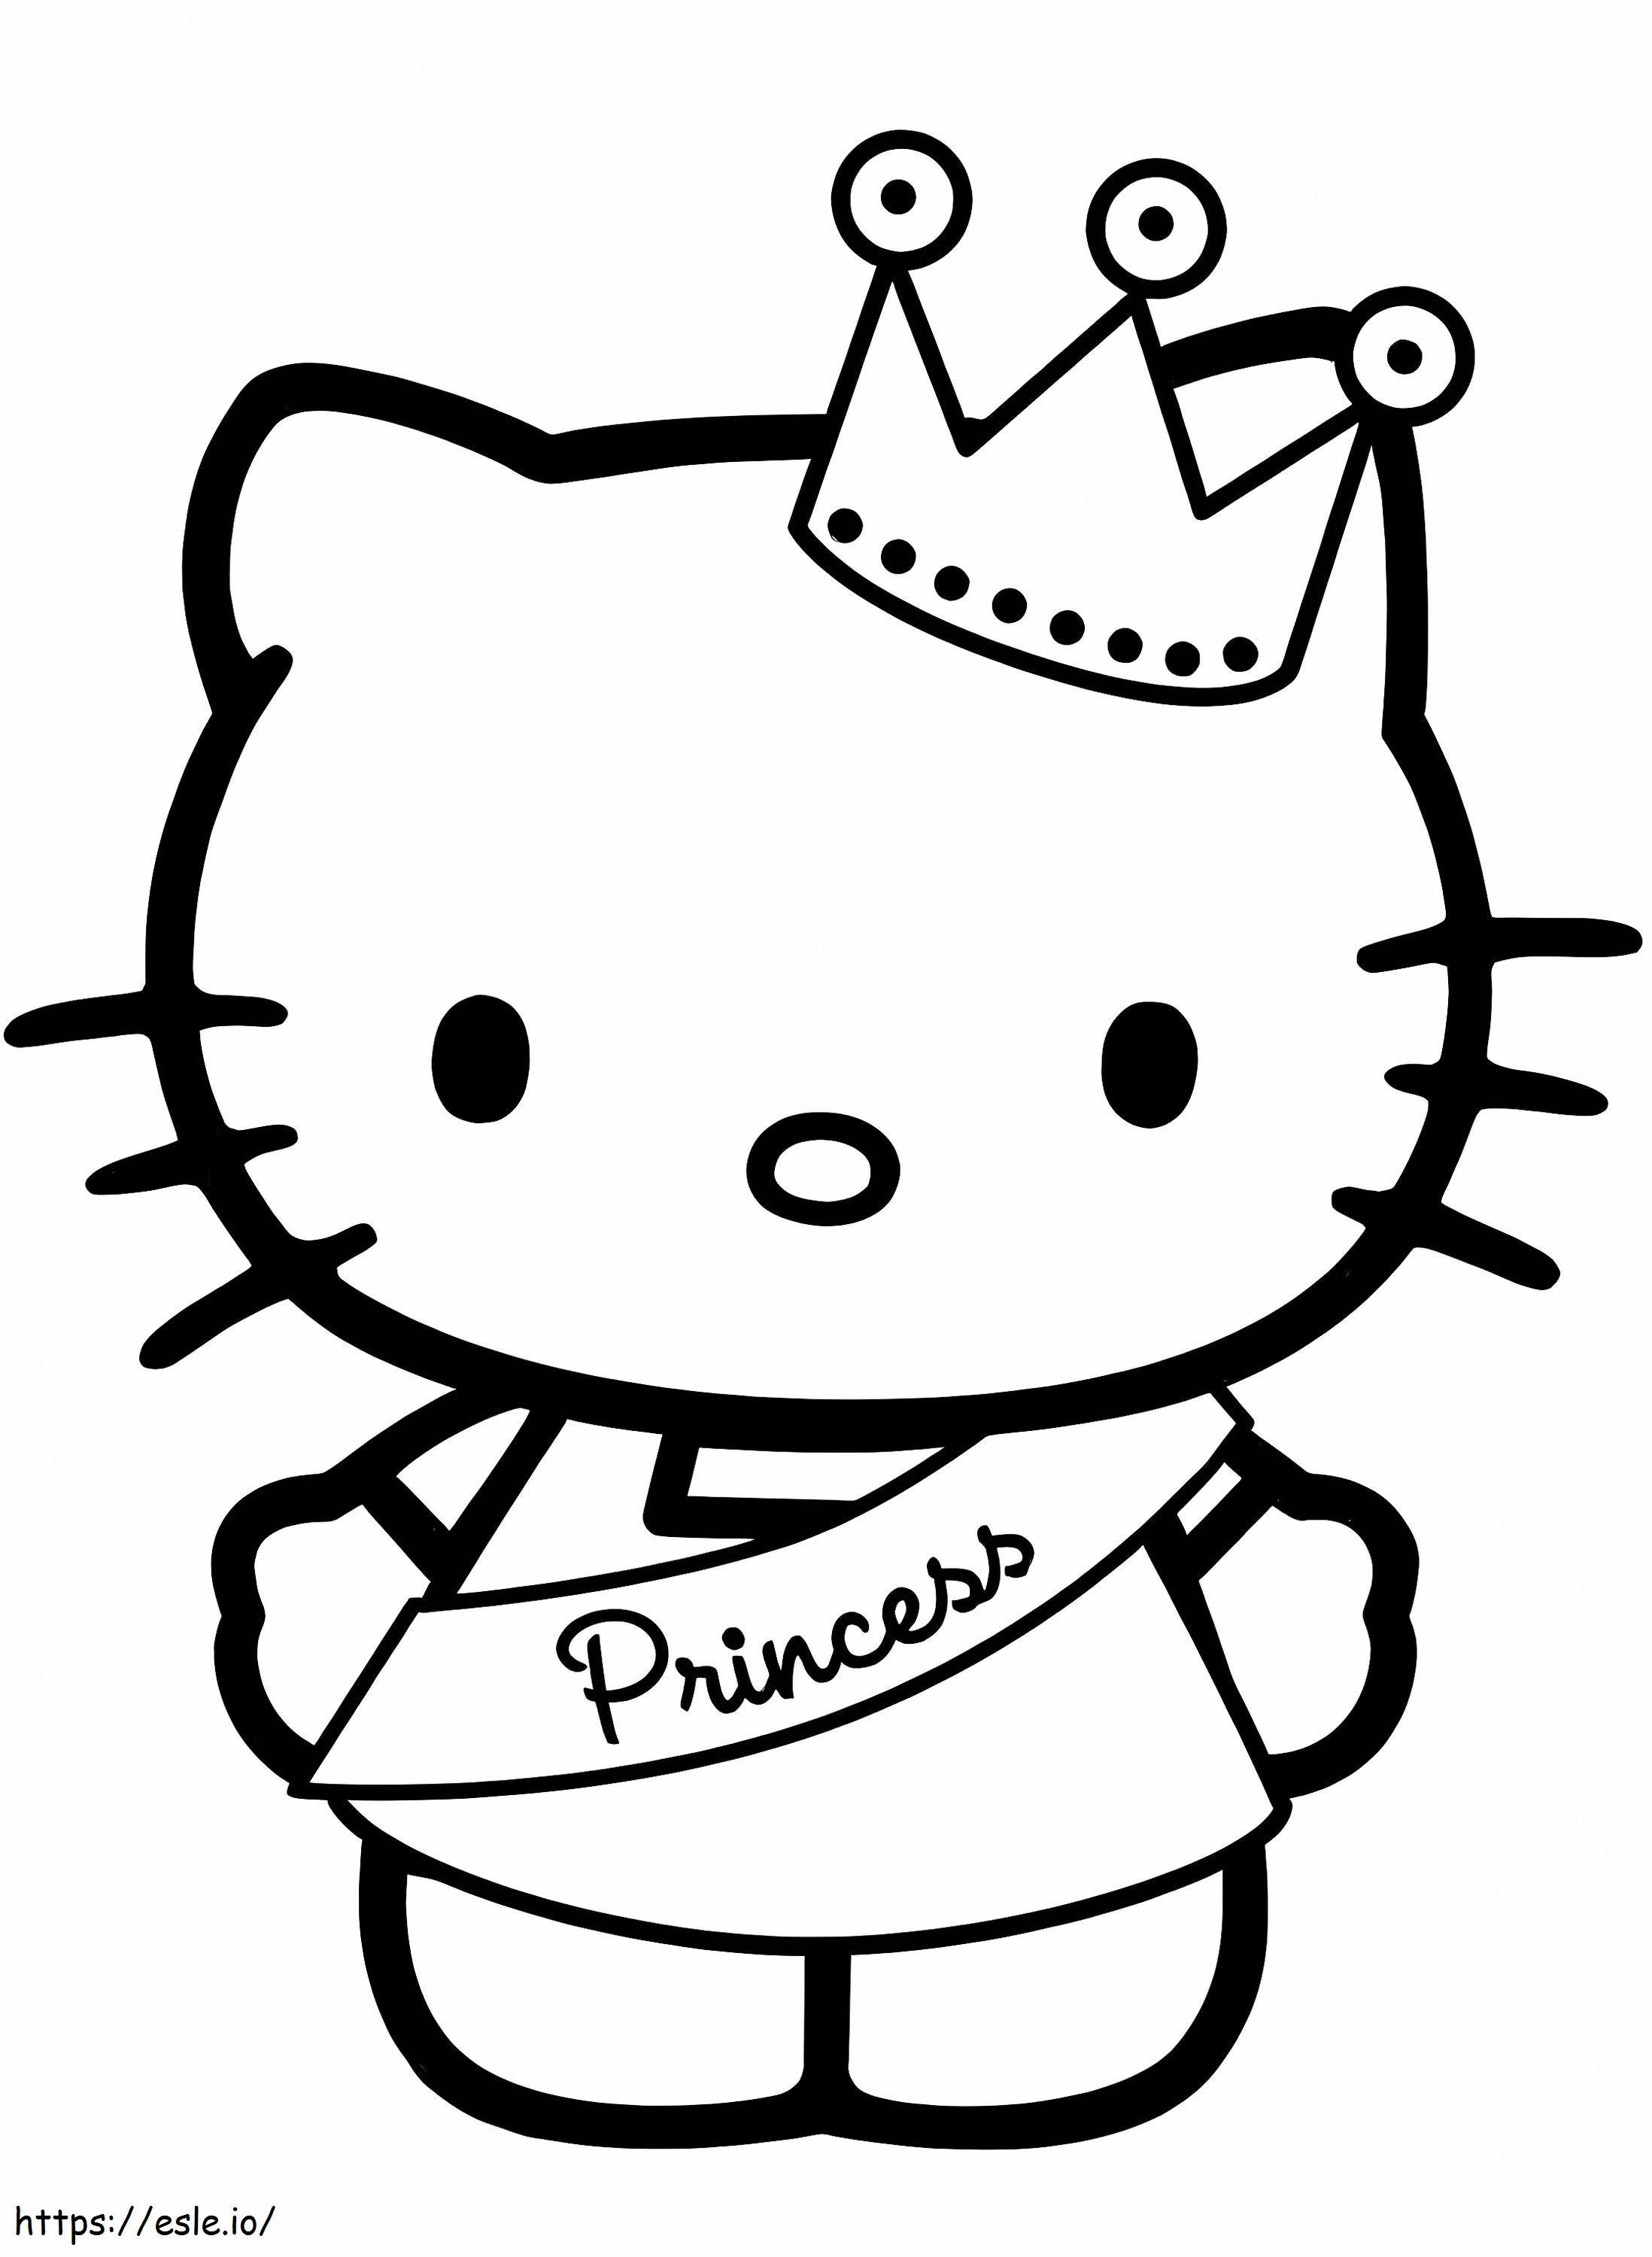 Princess Hello Kitty coloring page